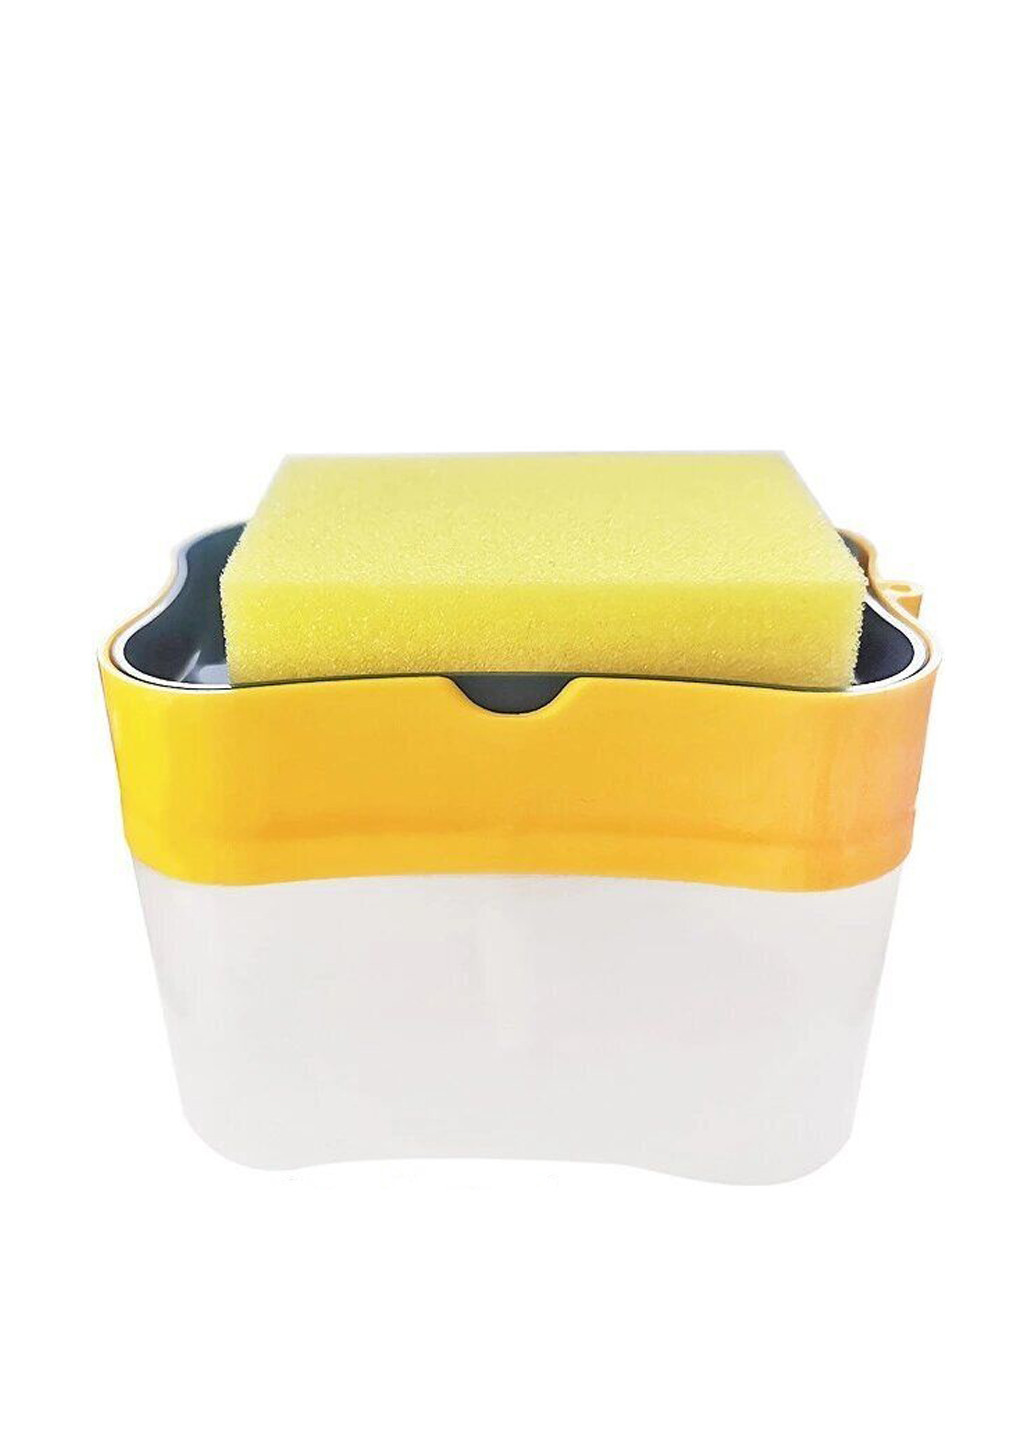 Диспенсер, 10х10,5 см Sponge Caddy однотонный жёлтый